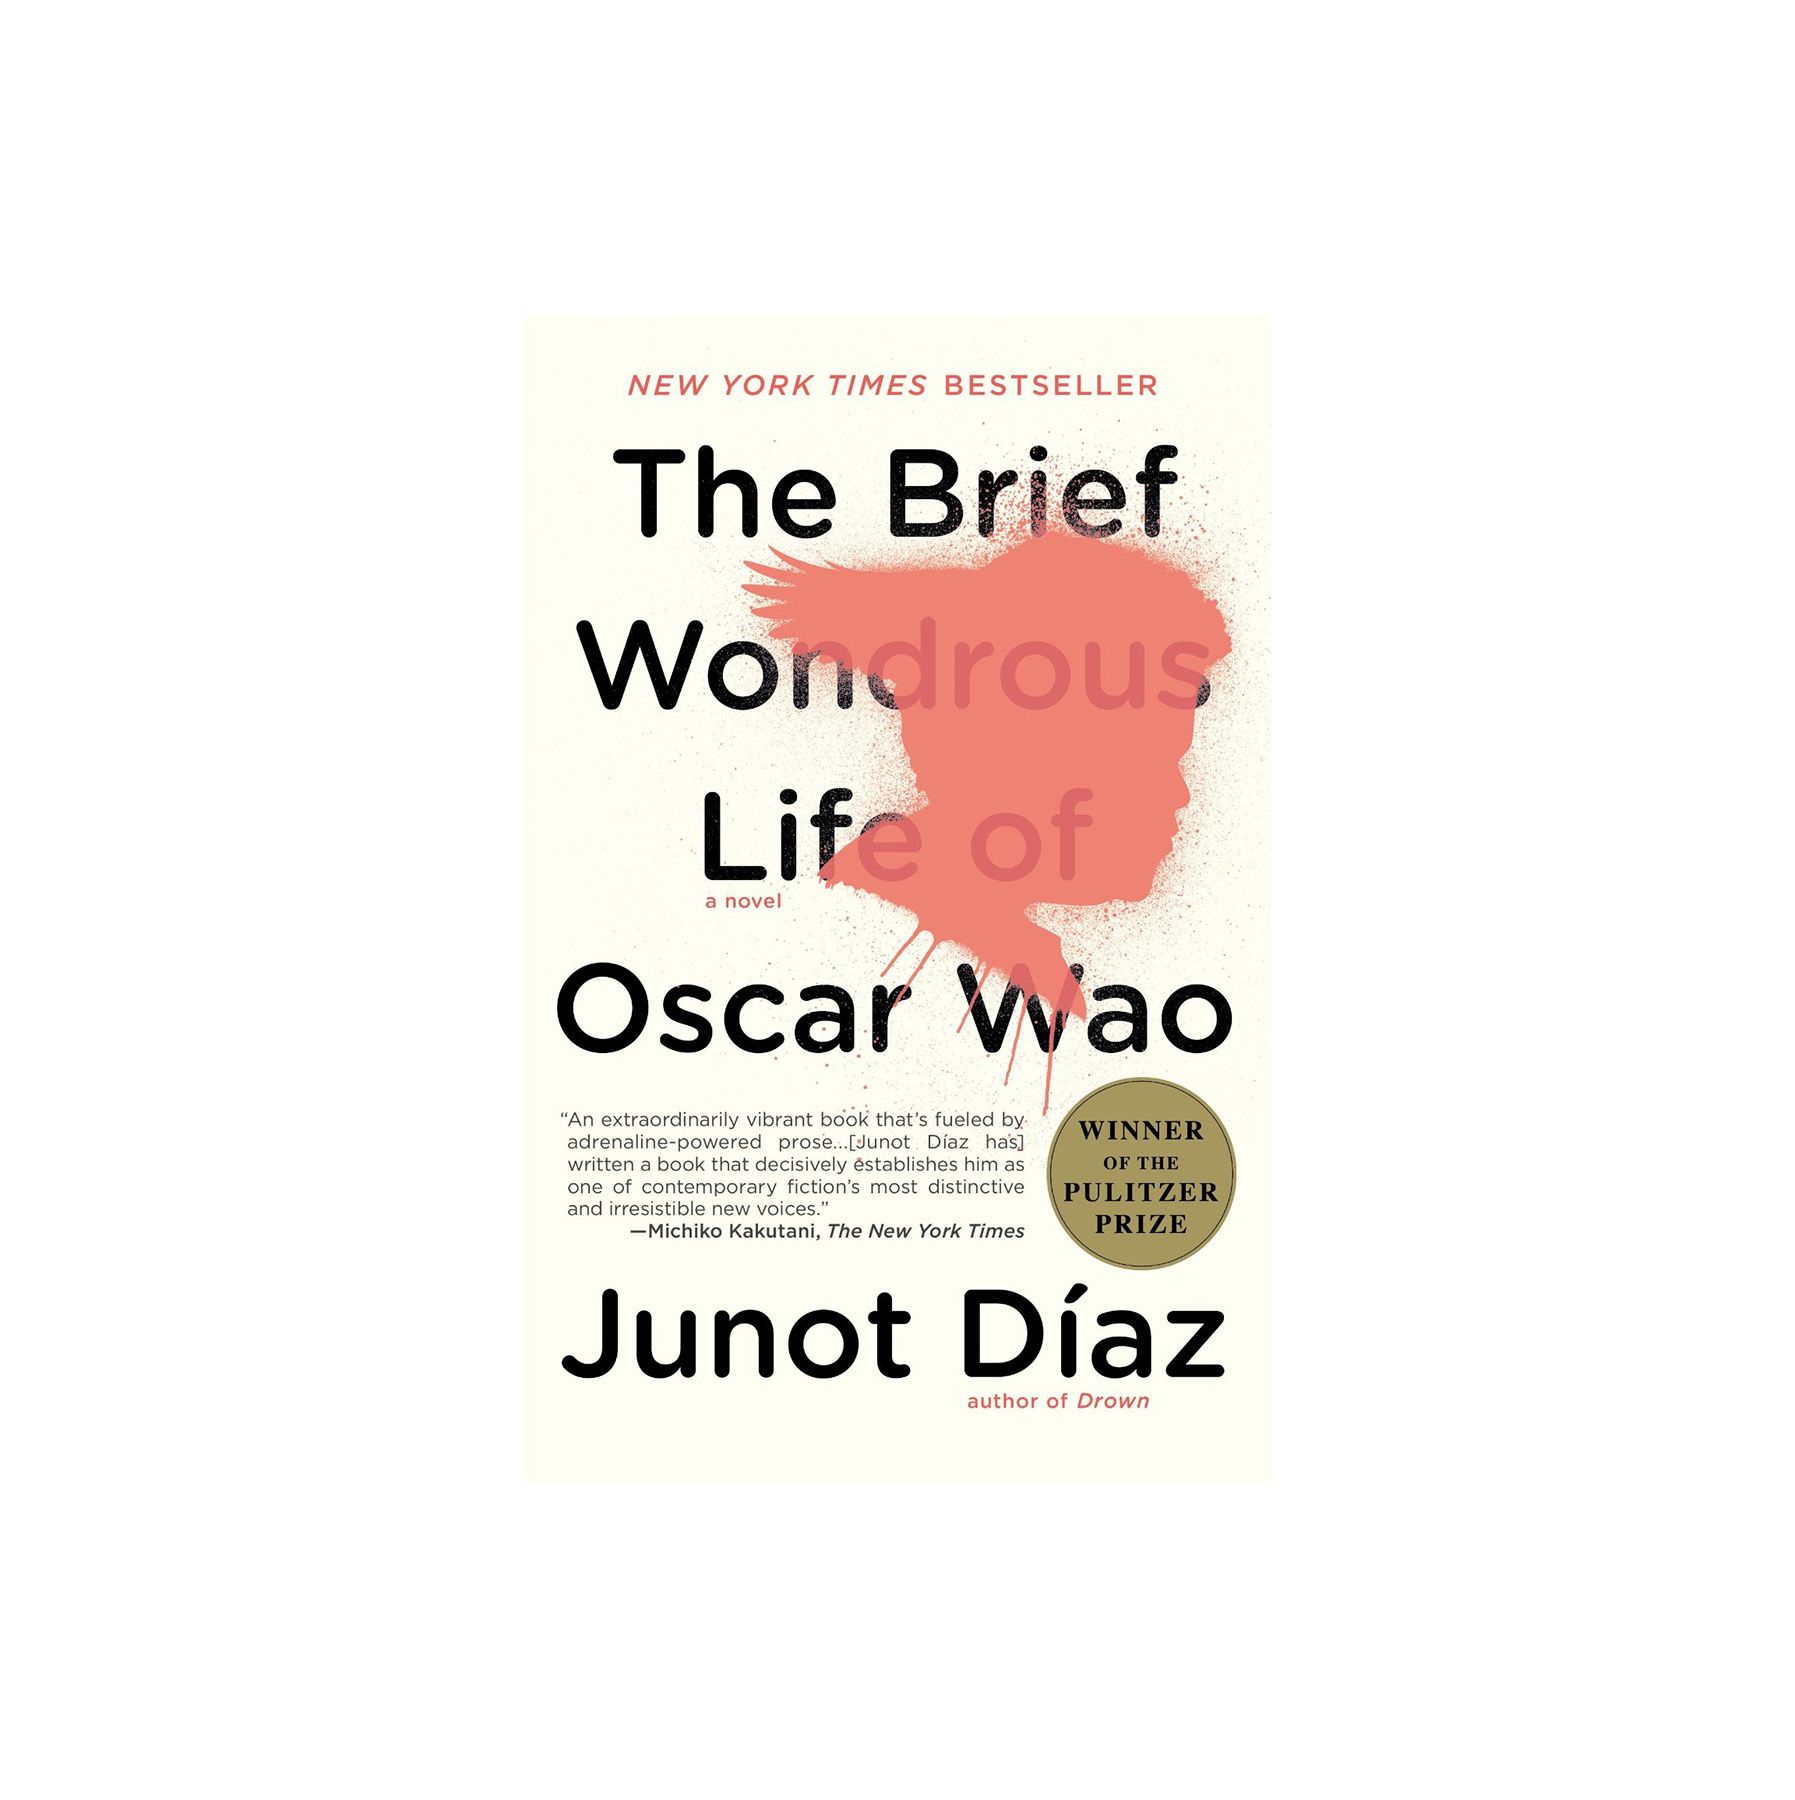 La breve meravigliosa vita di Oscar Wao, di Junot Diaz